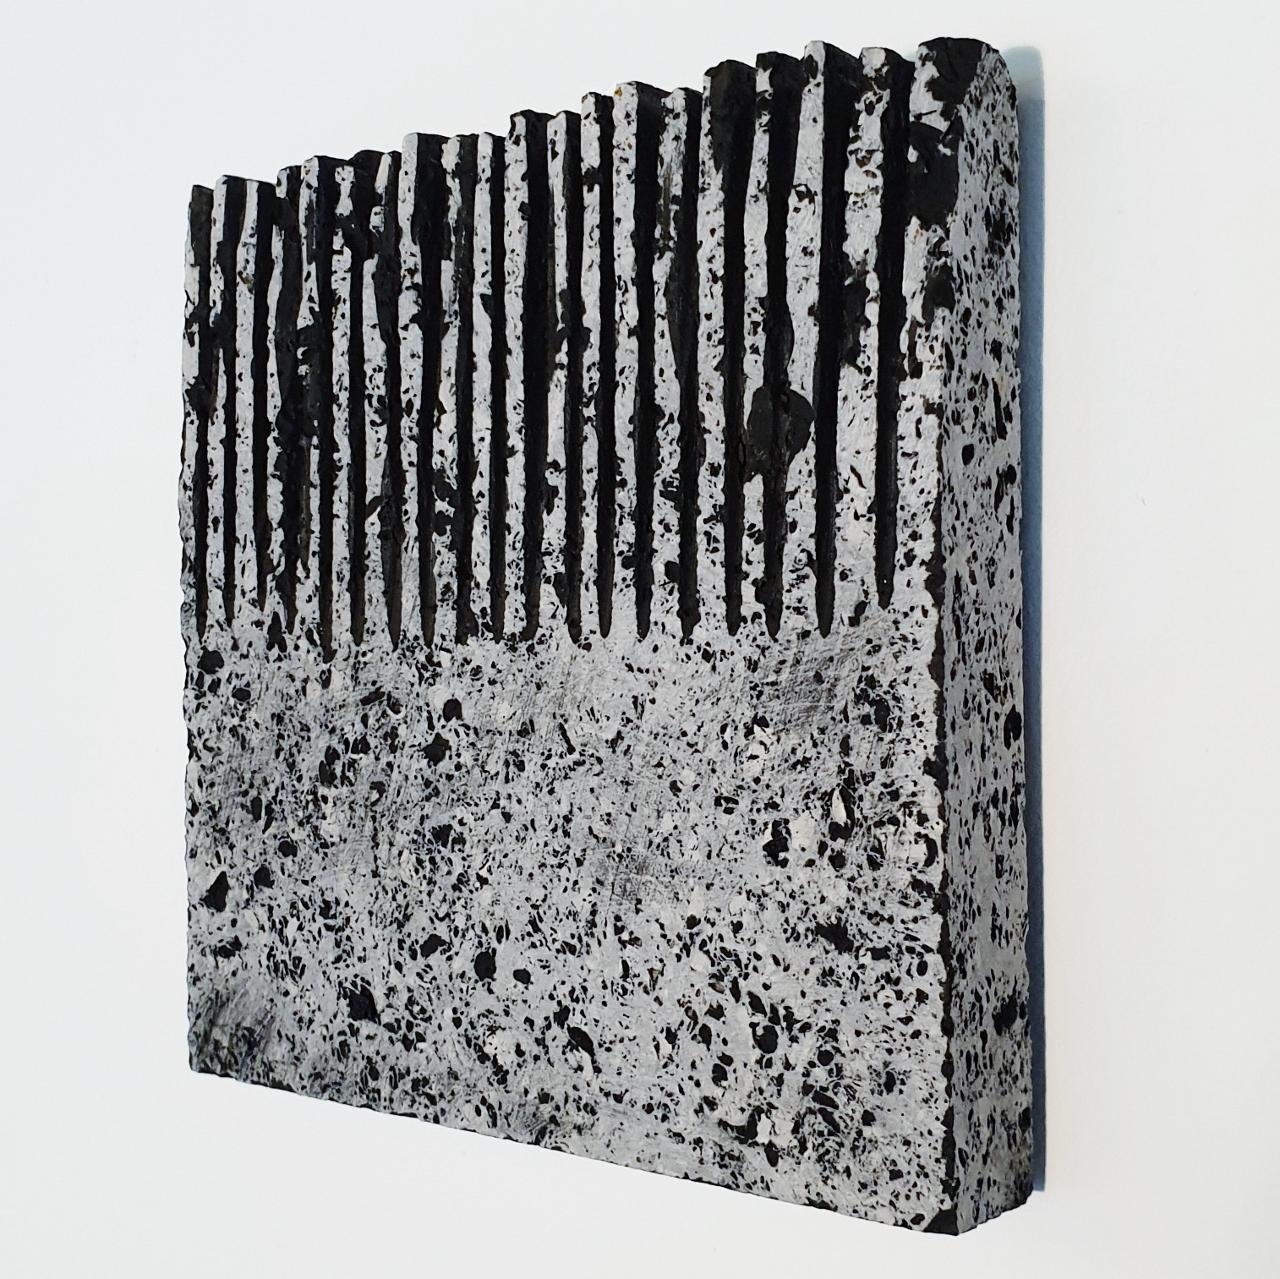 o.T. (Bk15Hf) - grey black contemporary modern wall sculpture painting relief - Black Abstract Sculpture by Dieter Kränzlein